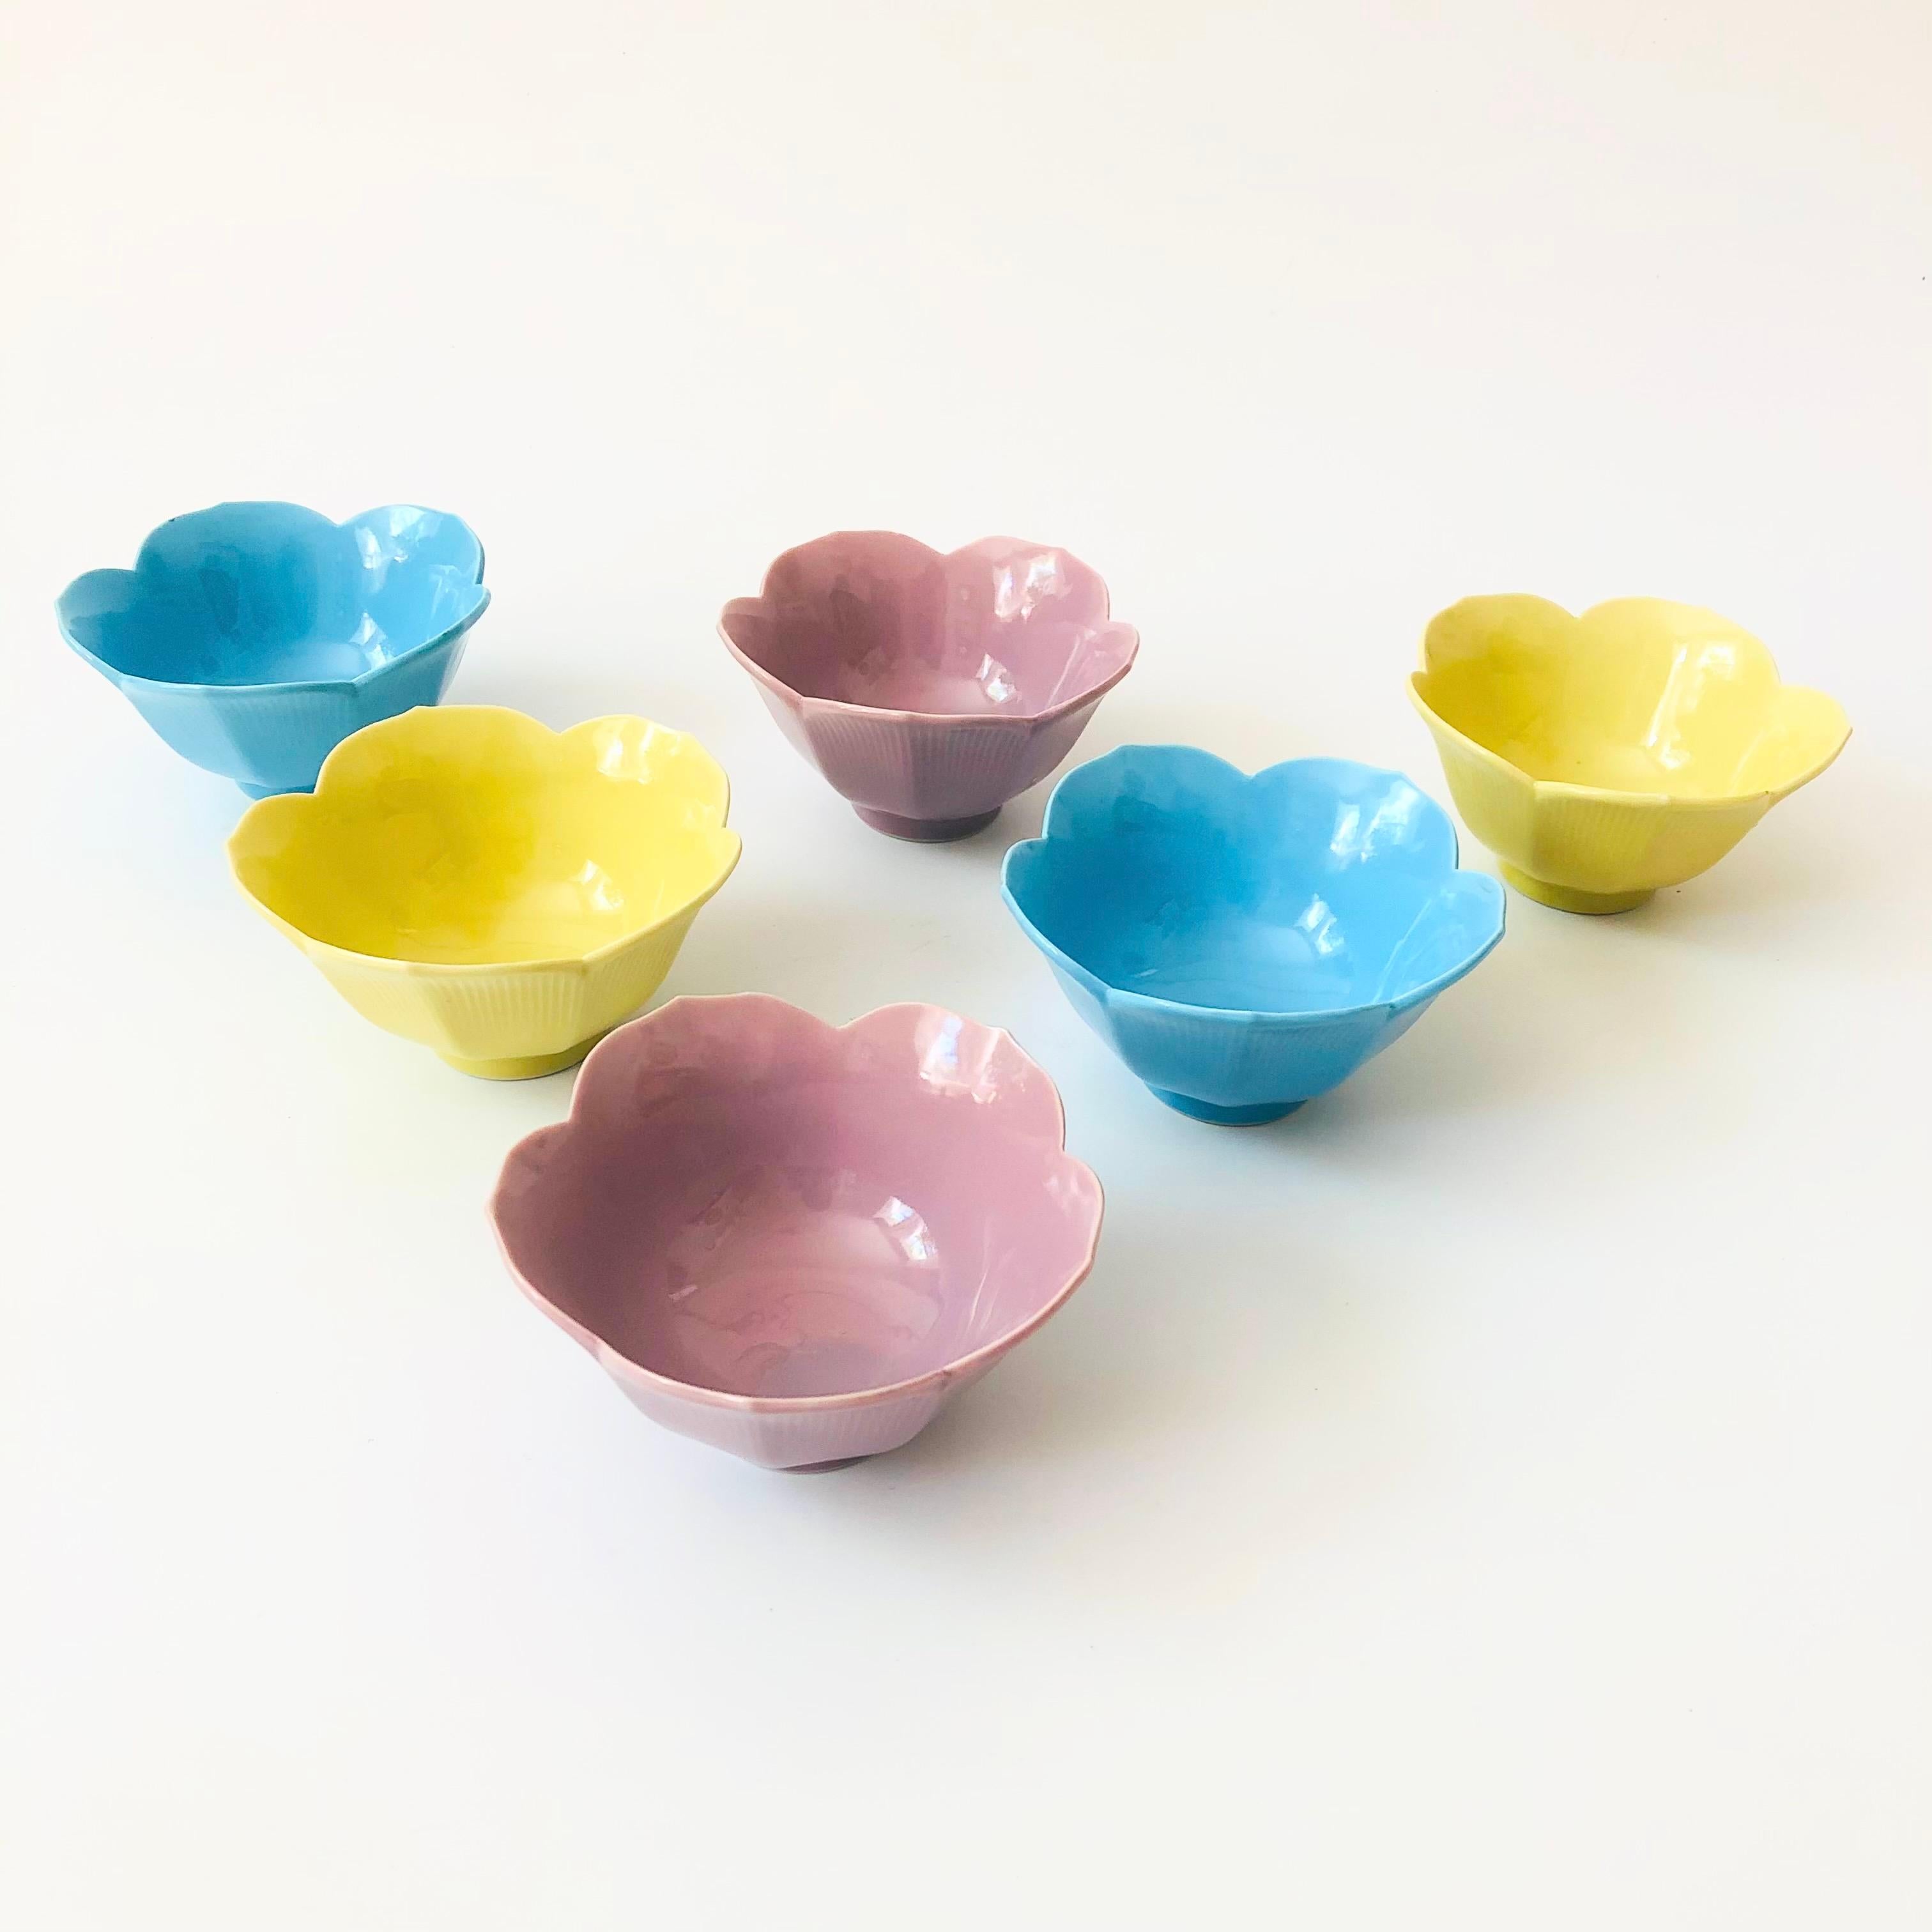 Ceramic Colorful Lotus Bowls - Set of 6 For Sale